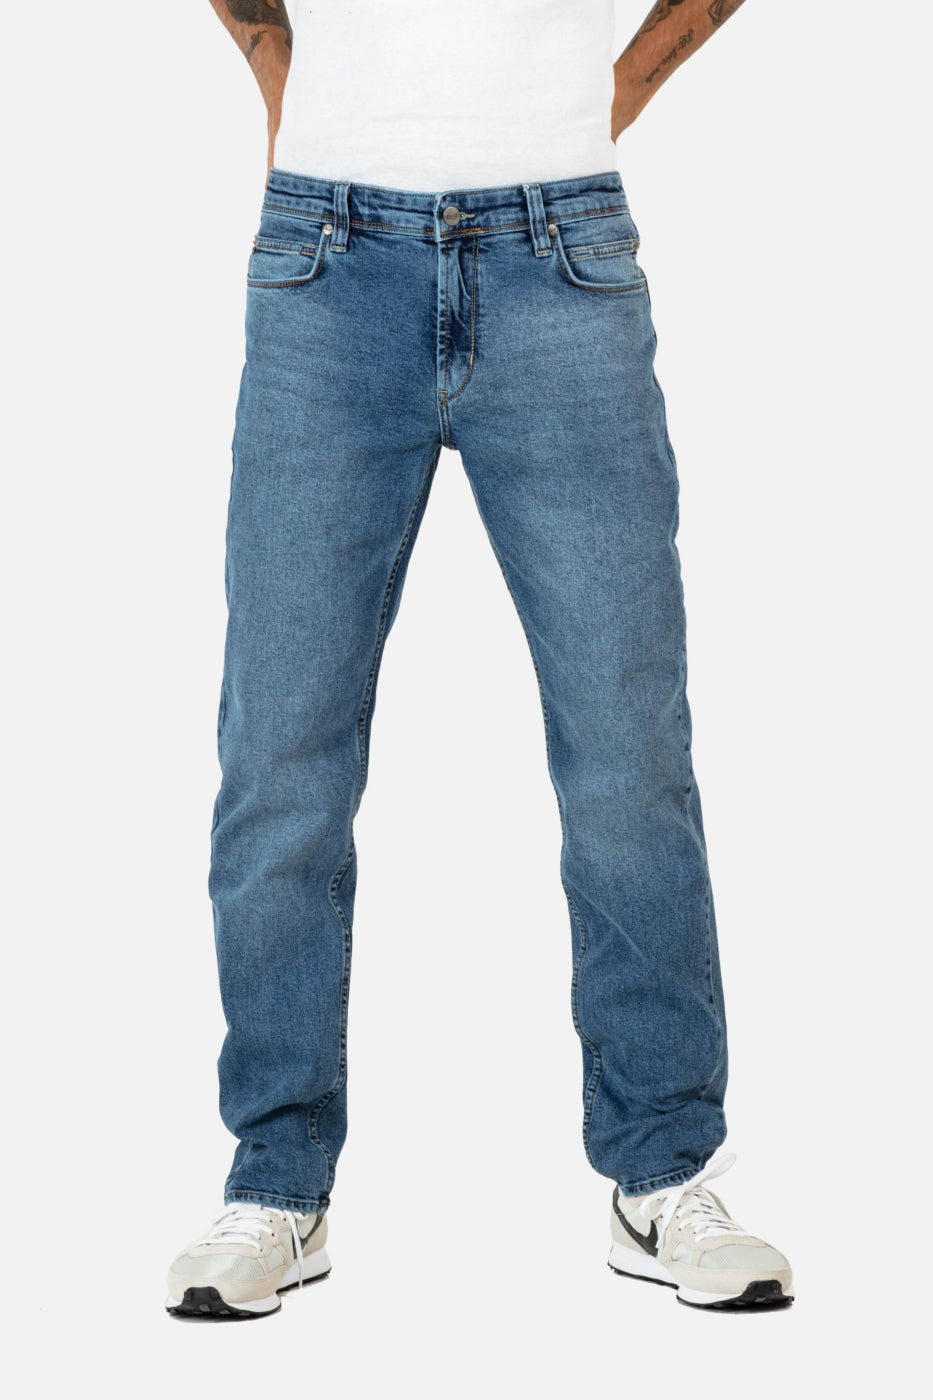 Reell Nova 2 Jeans - Retro Mid Blue